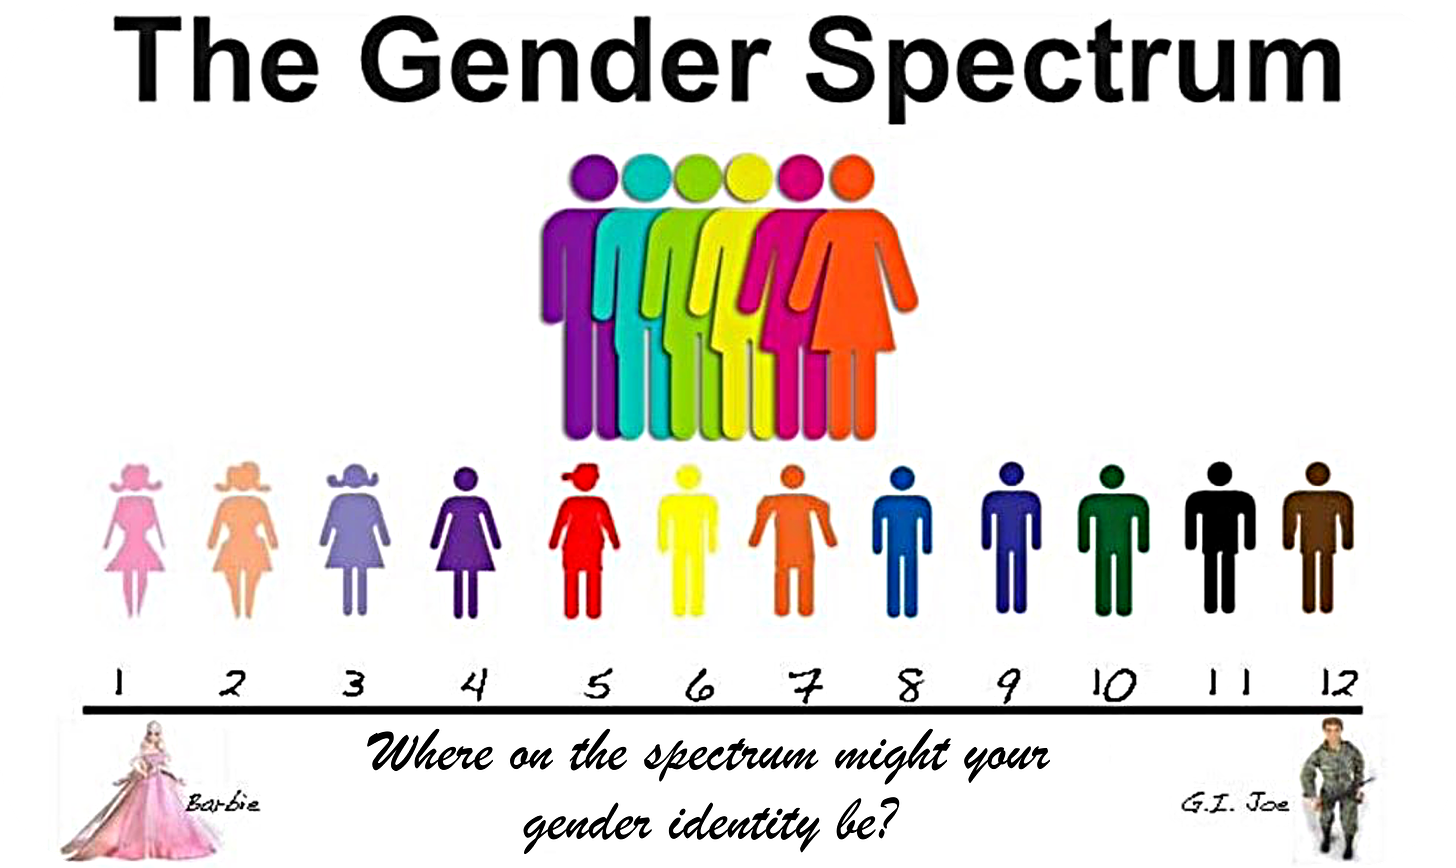 Mermaids UK teaching slide: Gender is a Spectrum. Where on the spectrum might your gender identity be? Between Barbie and G.I. Joe